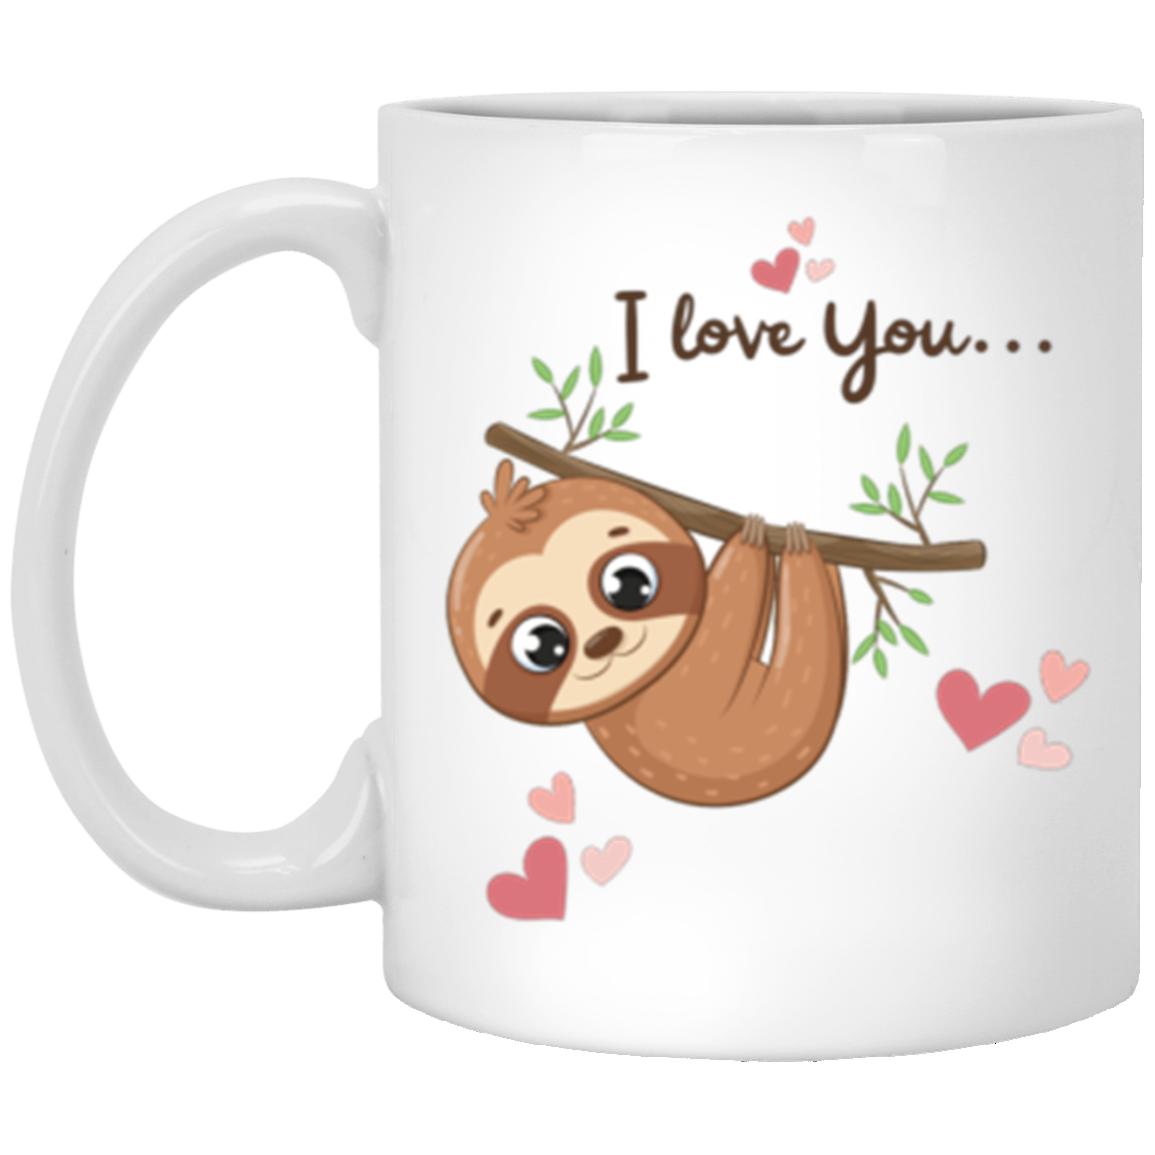 I Love You... Slow Much Baby Sloth, Full Wrap-Around - 11 & 15 oz. White Mug